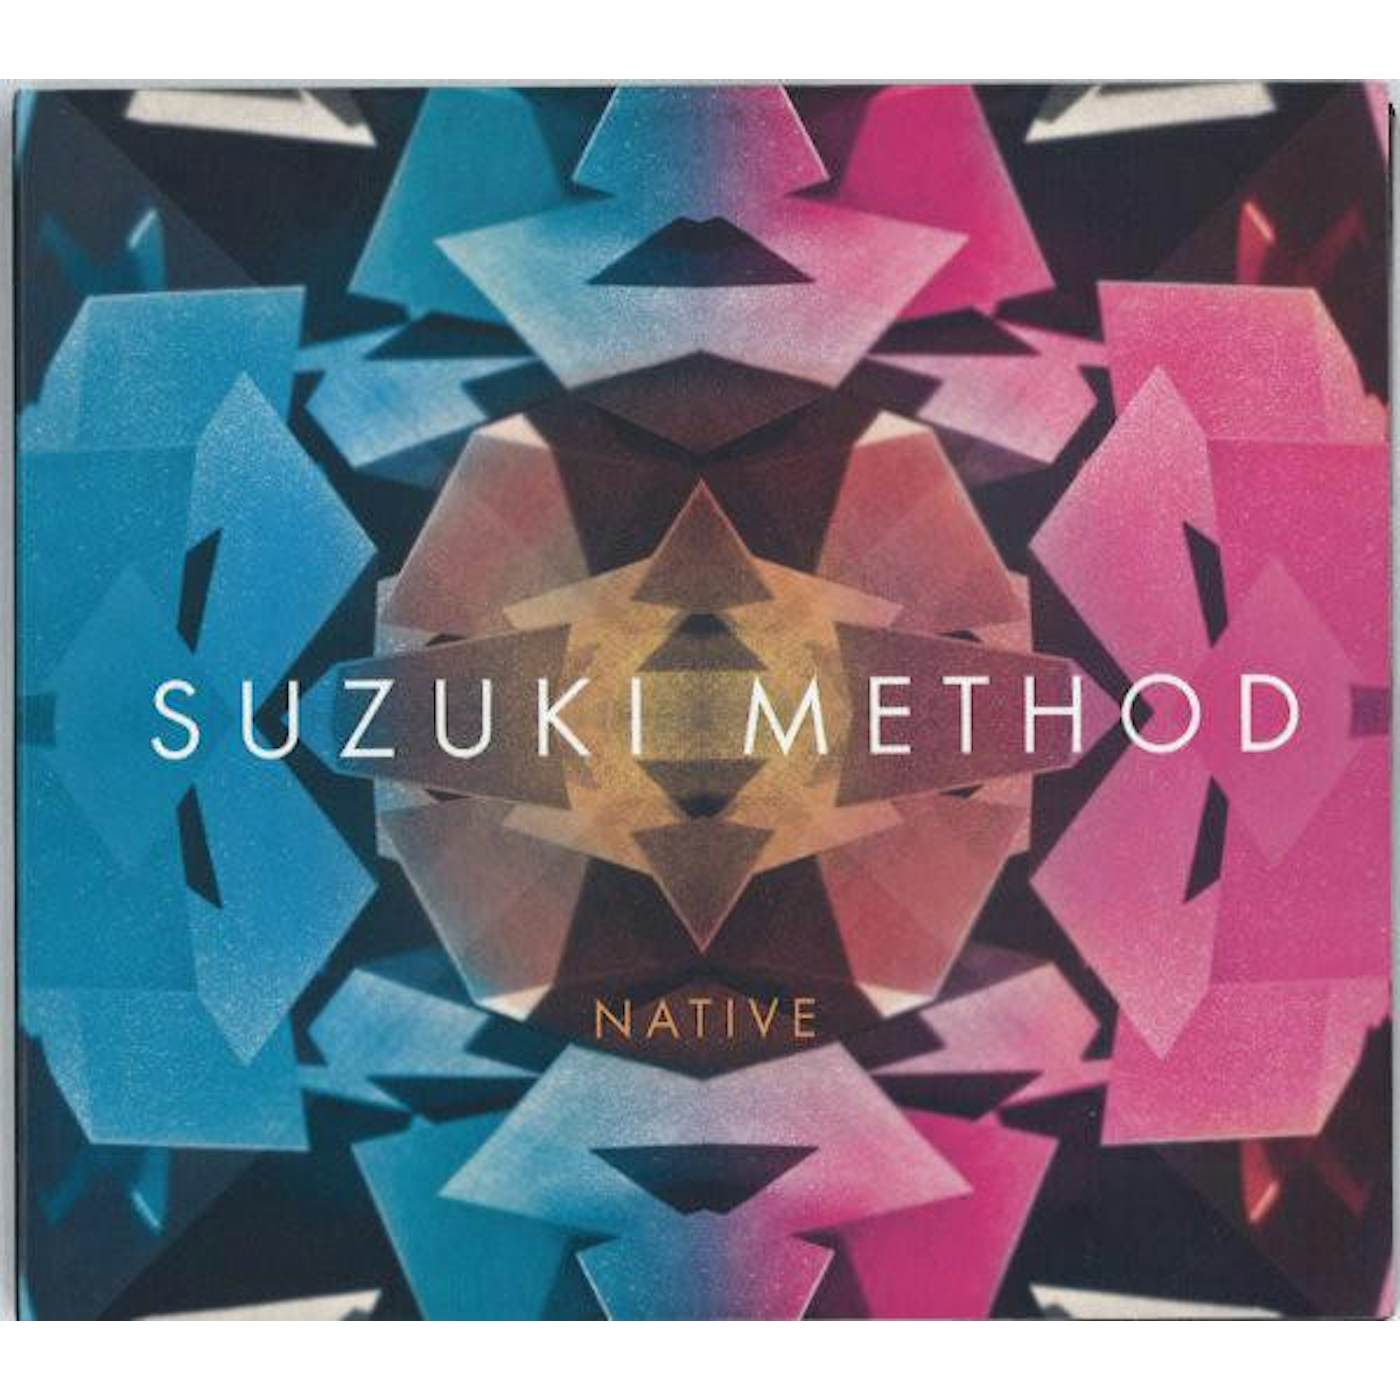 SUZUKI METHOD EP Vinyl Record